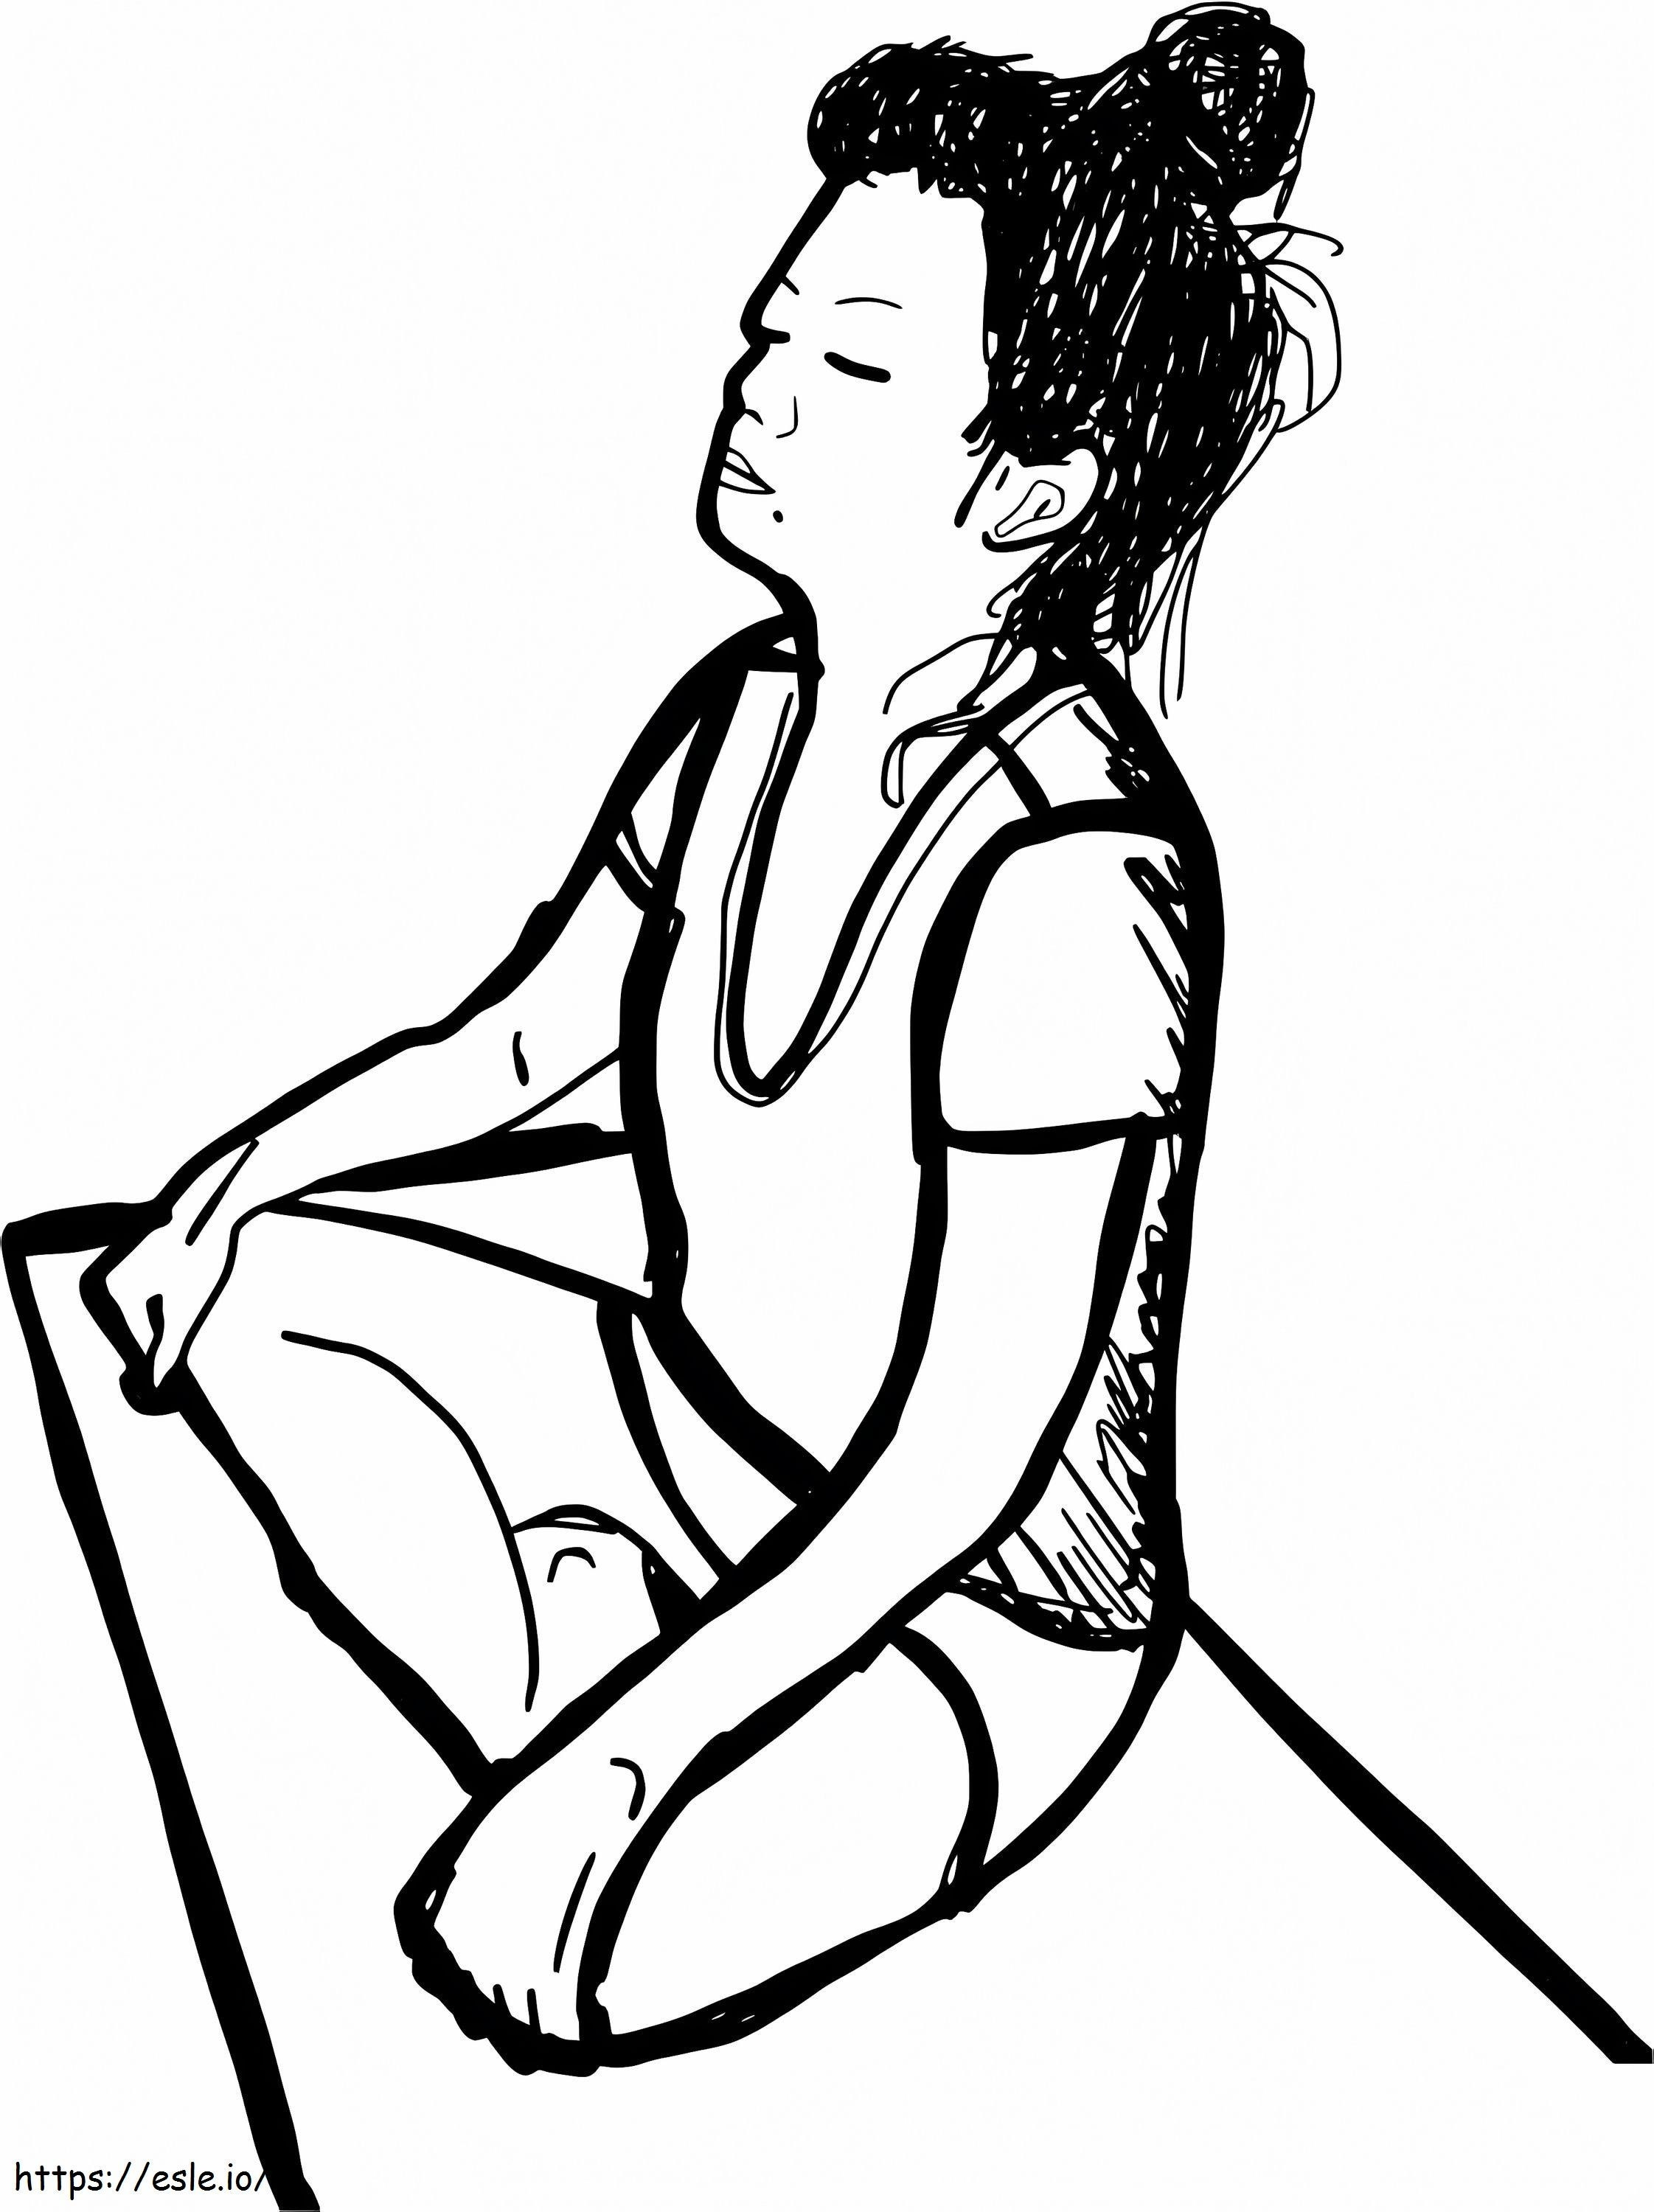 Yoga Meditation coloring page